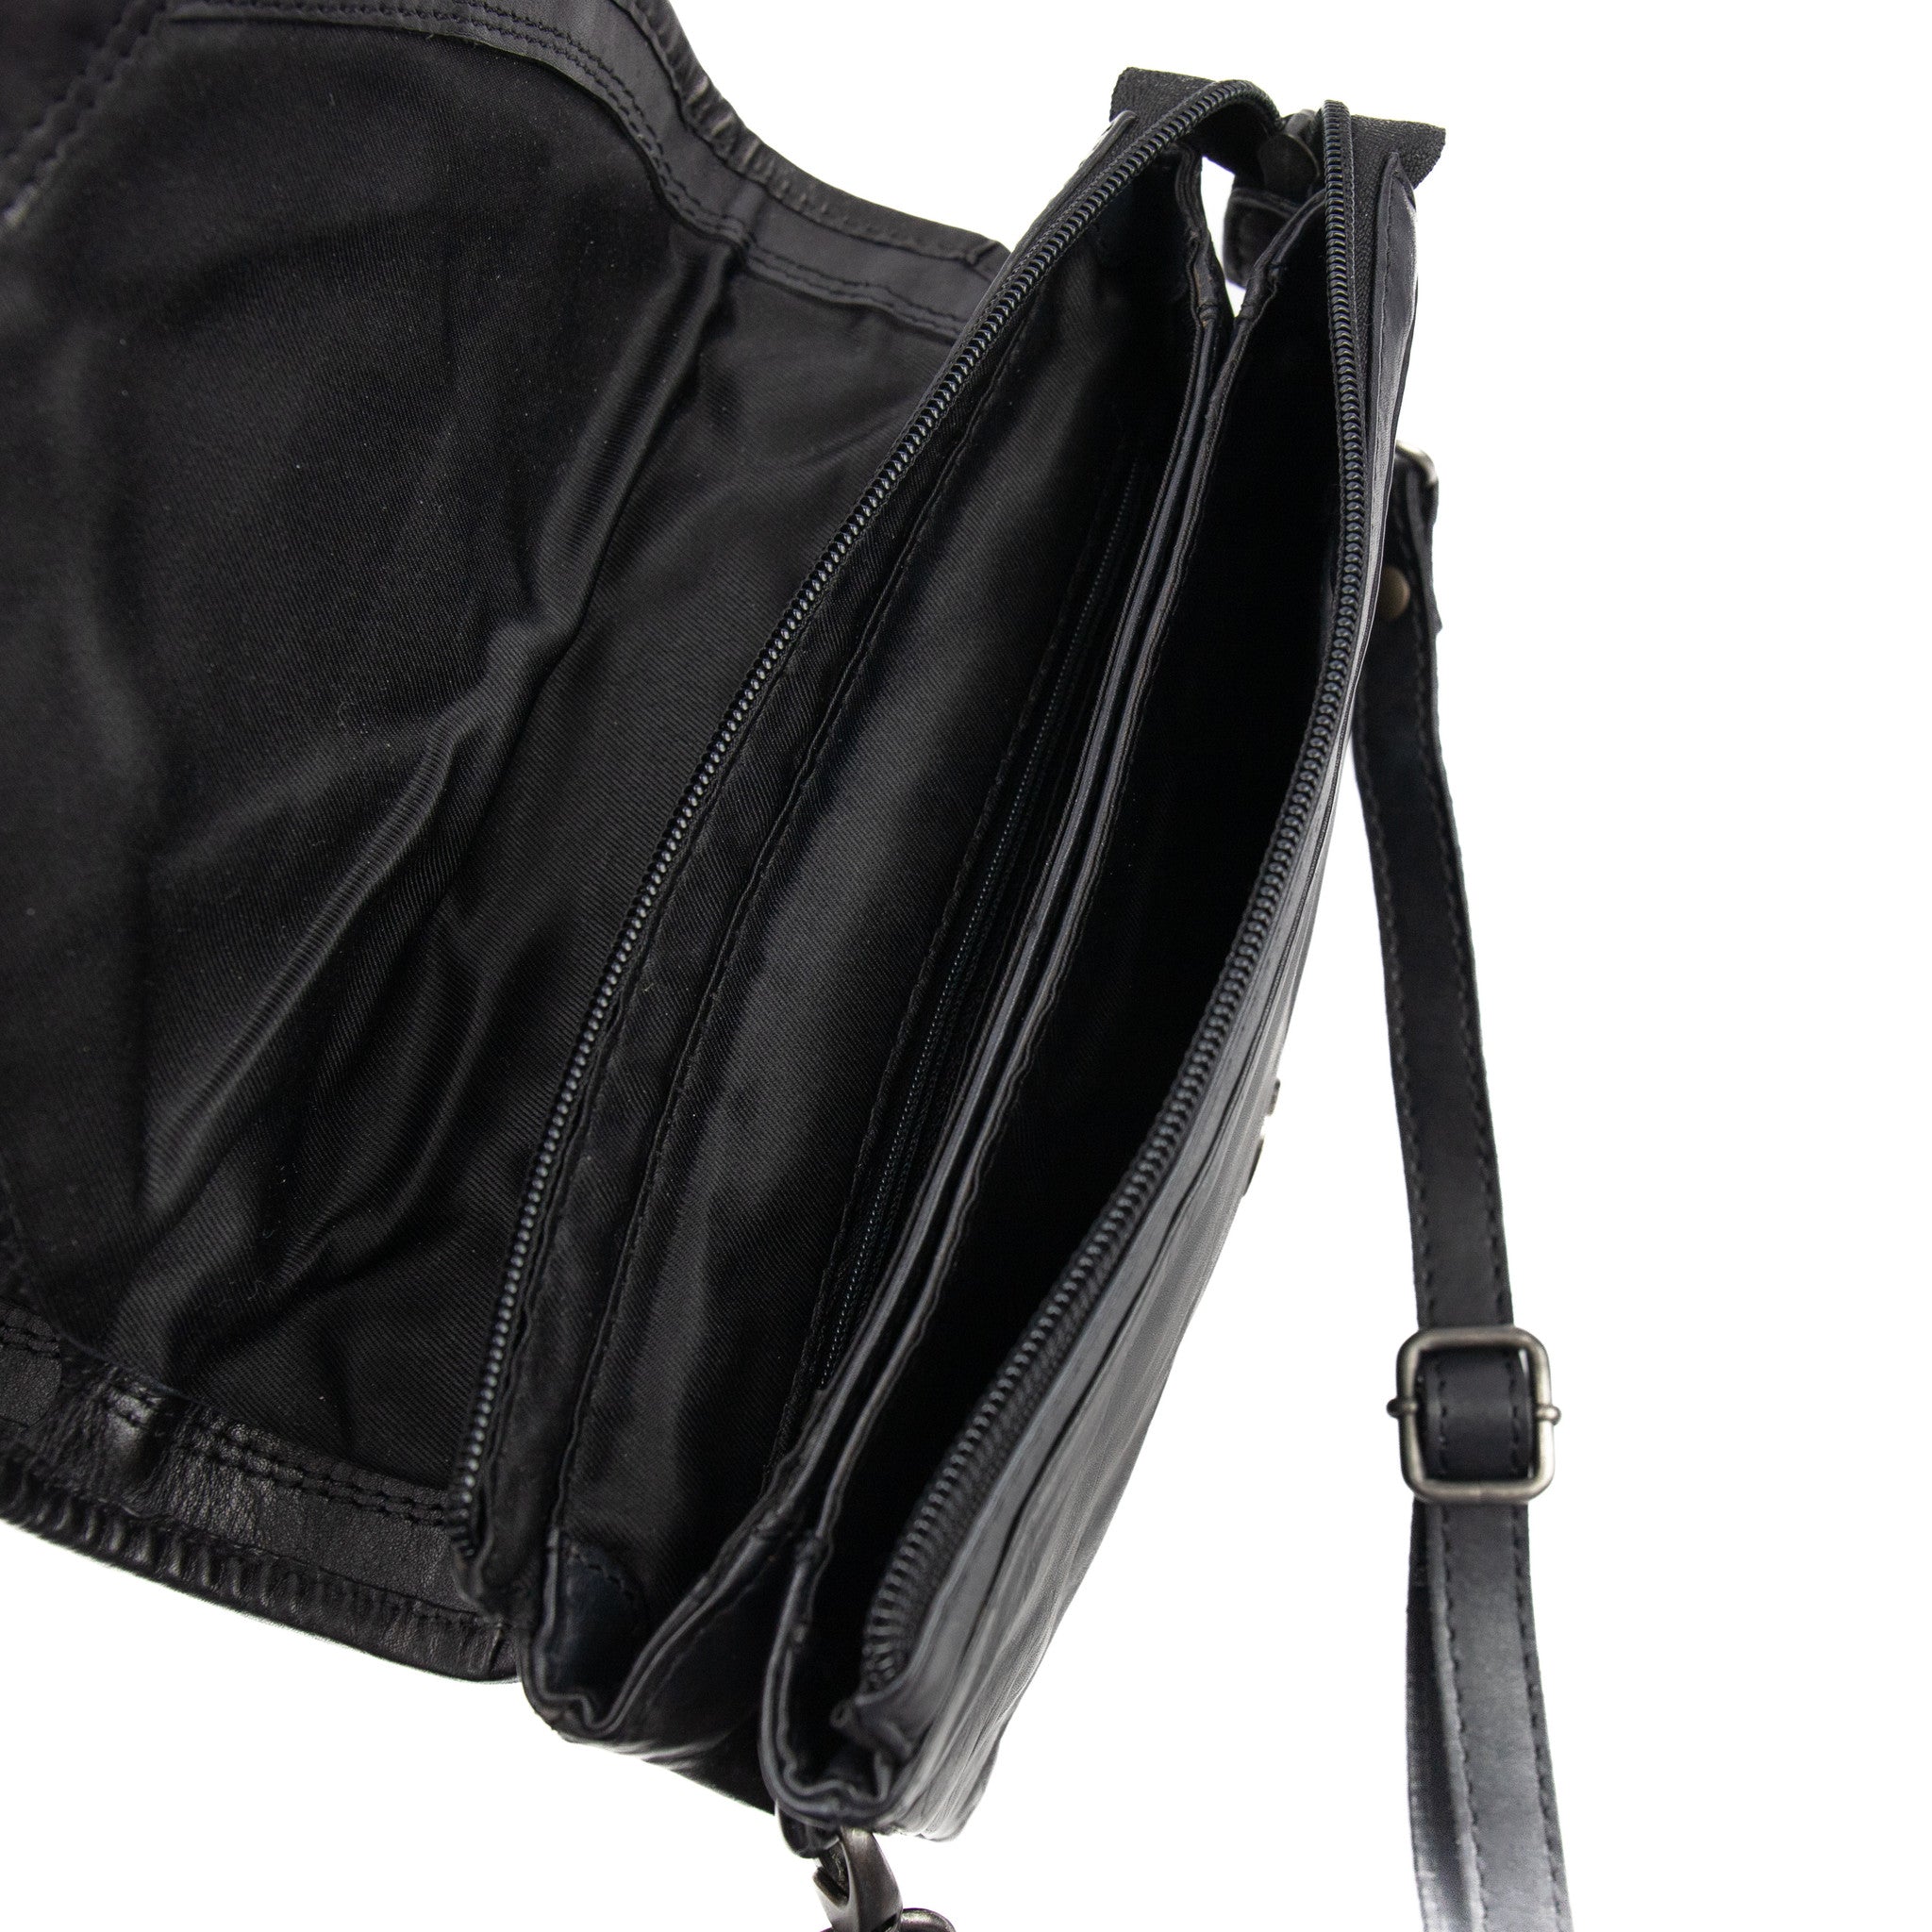 Envelope bag 'Mimi' black braided - CL 42381